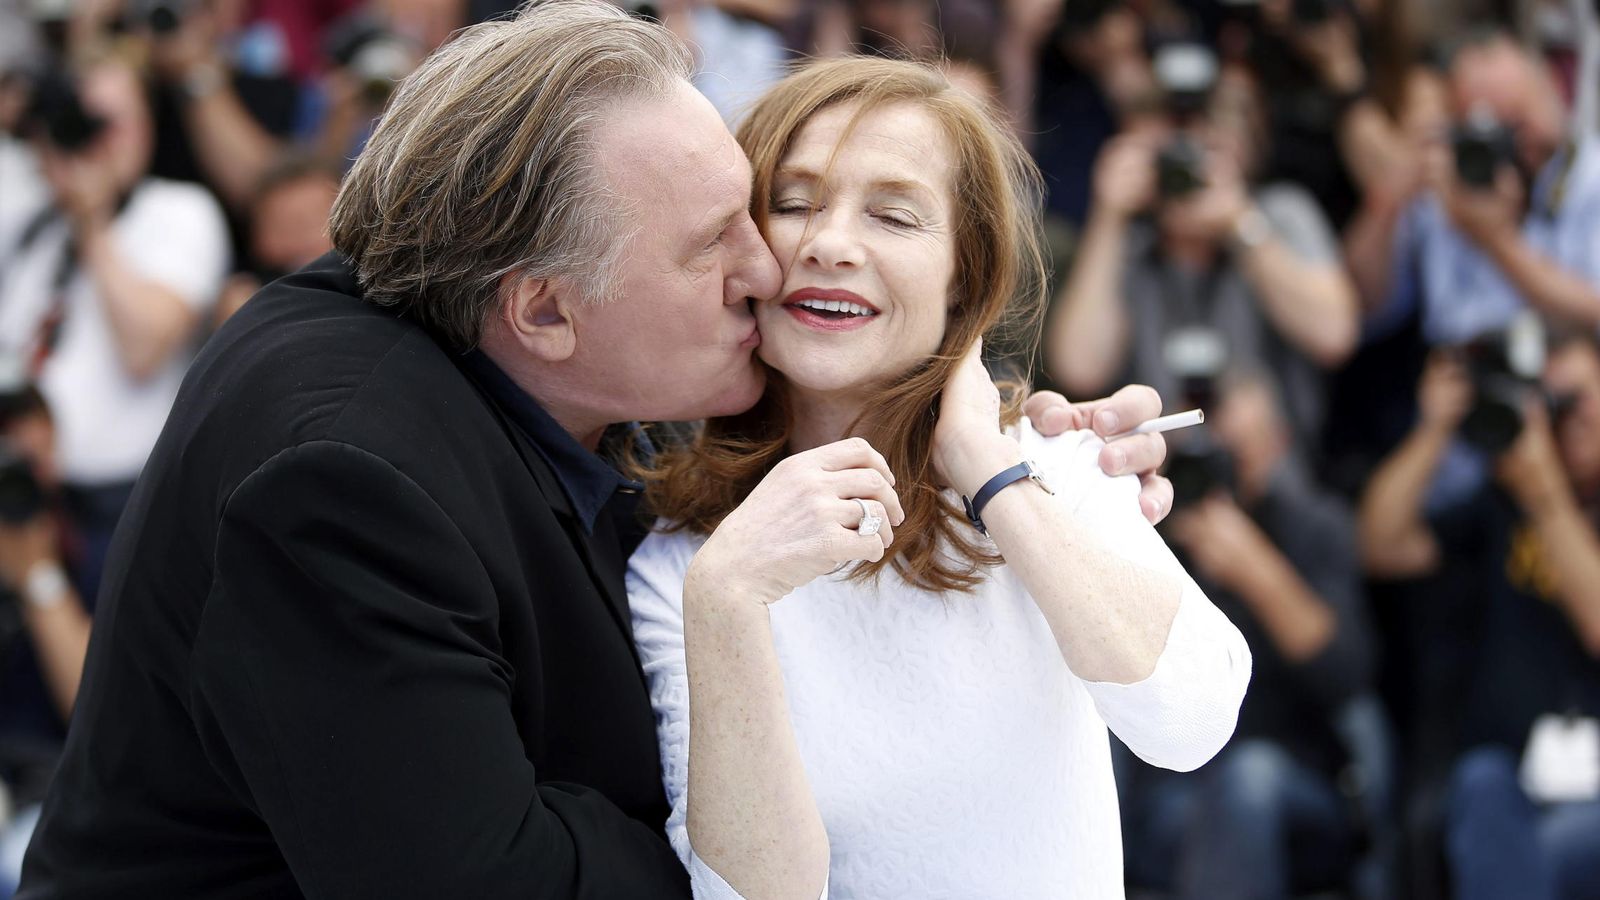 Foto: Gerard Depardieu (izq) e Isabelle Huppert (dcha) posan durante la presentación de la película "Valley of Love"